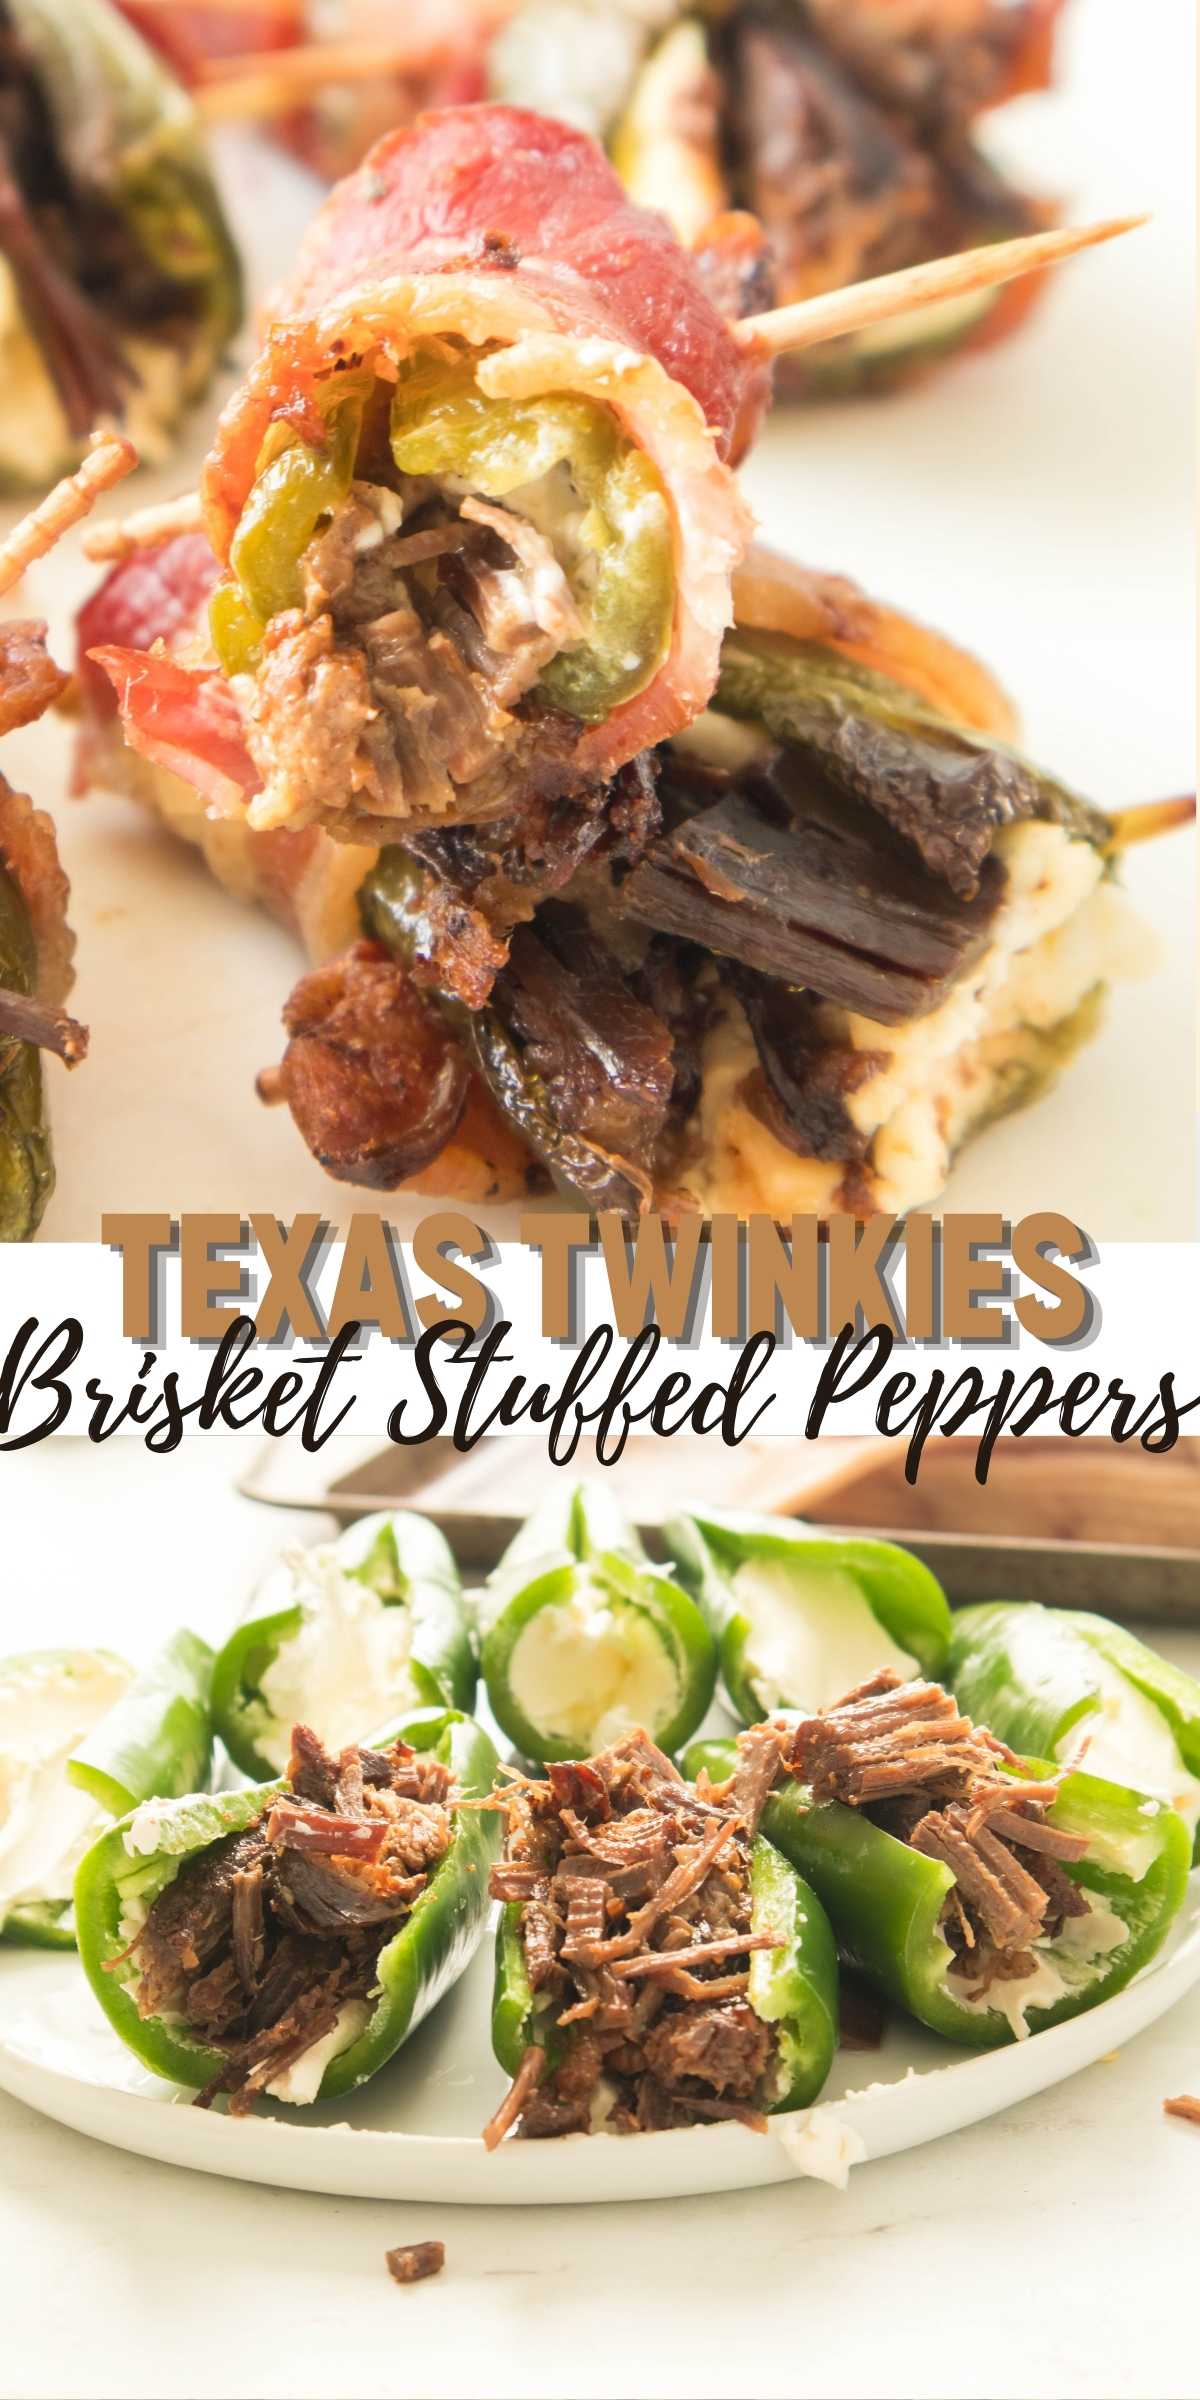 Texas Twinkies Brisket Stuffed Peppers